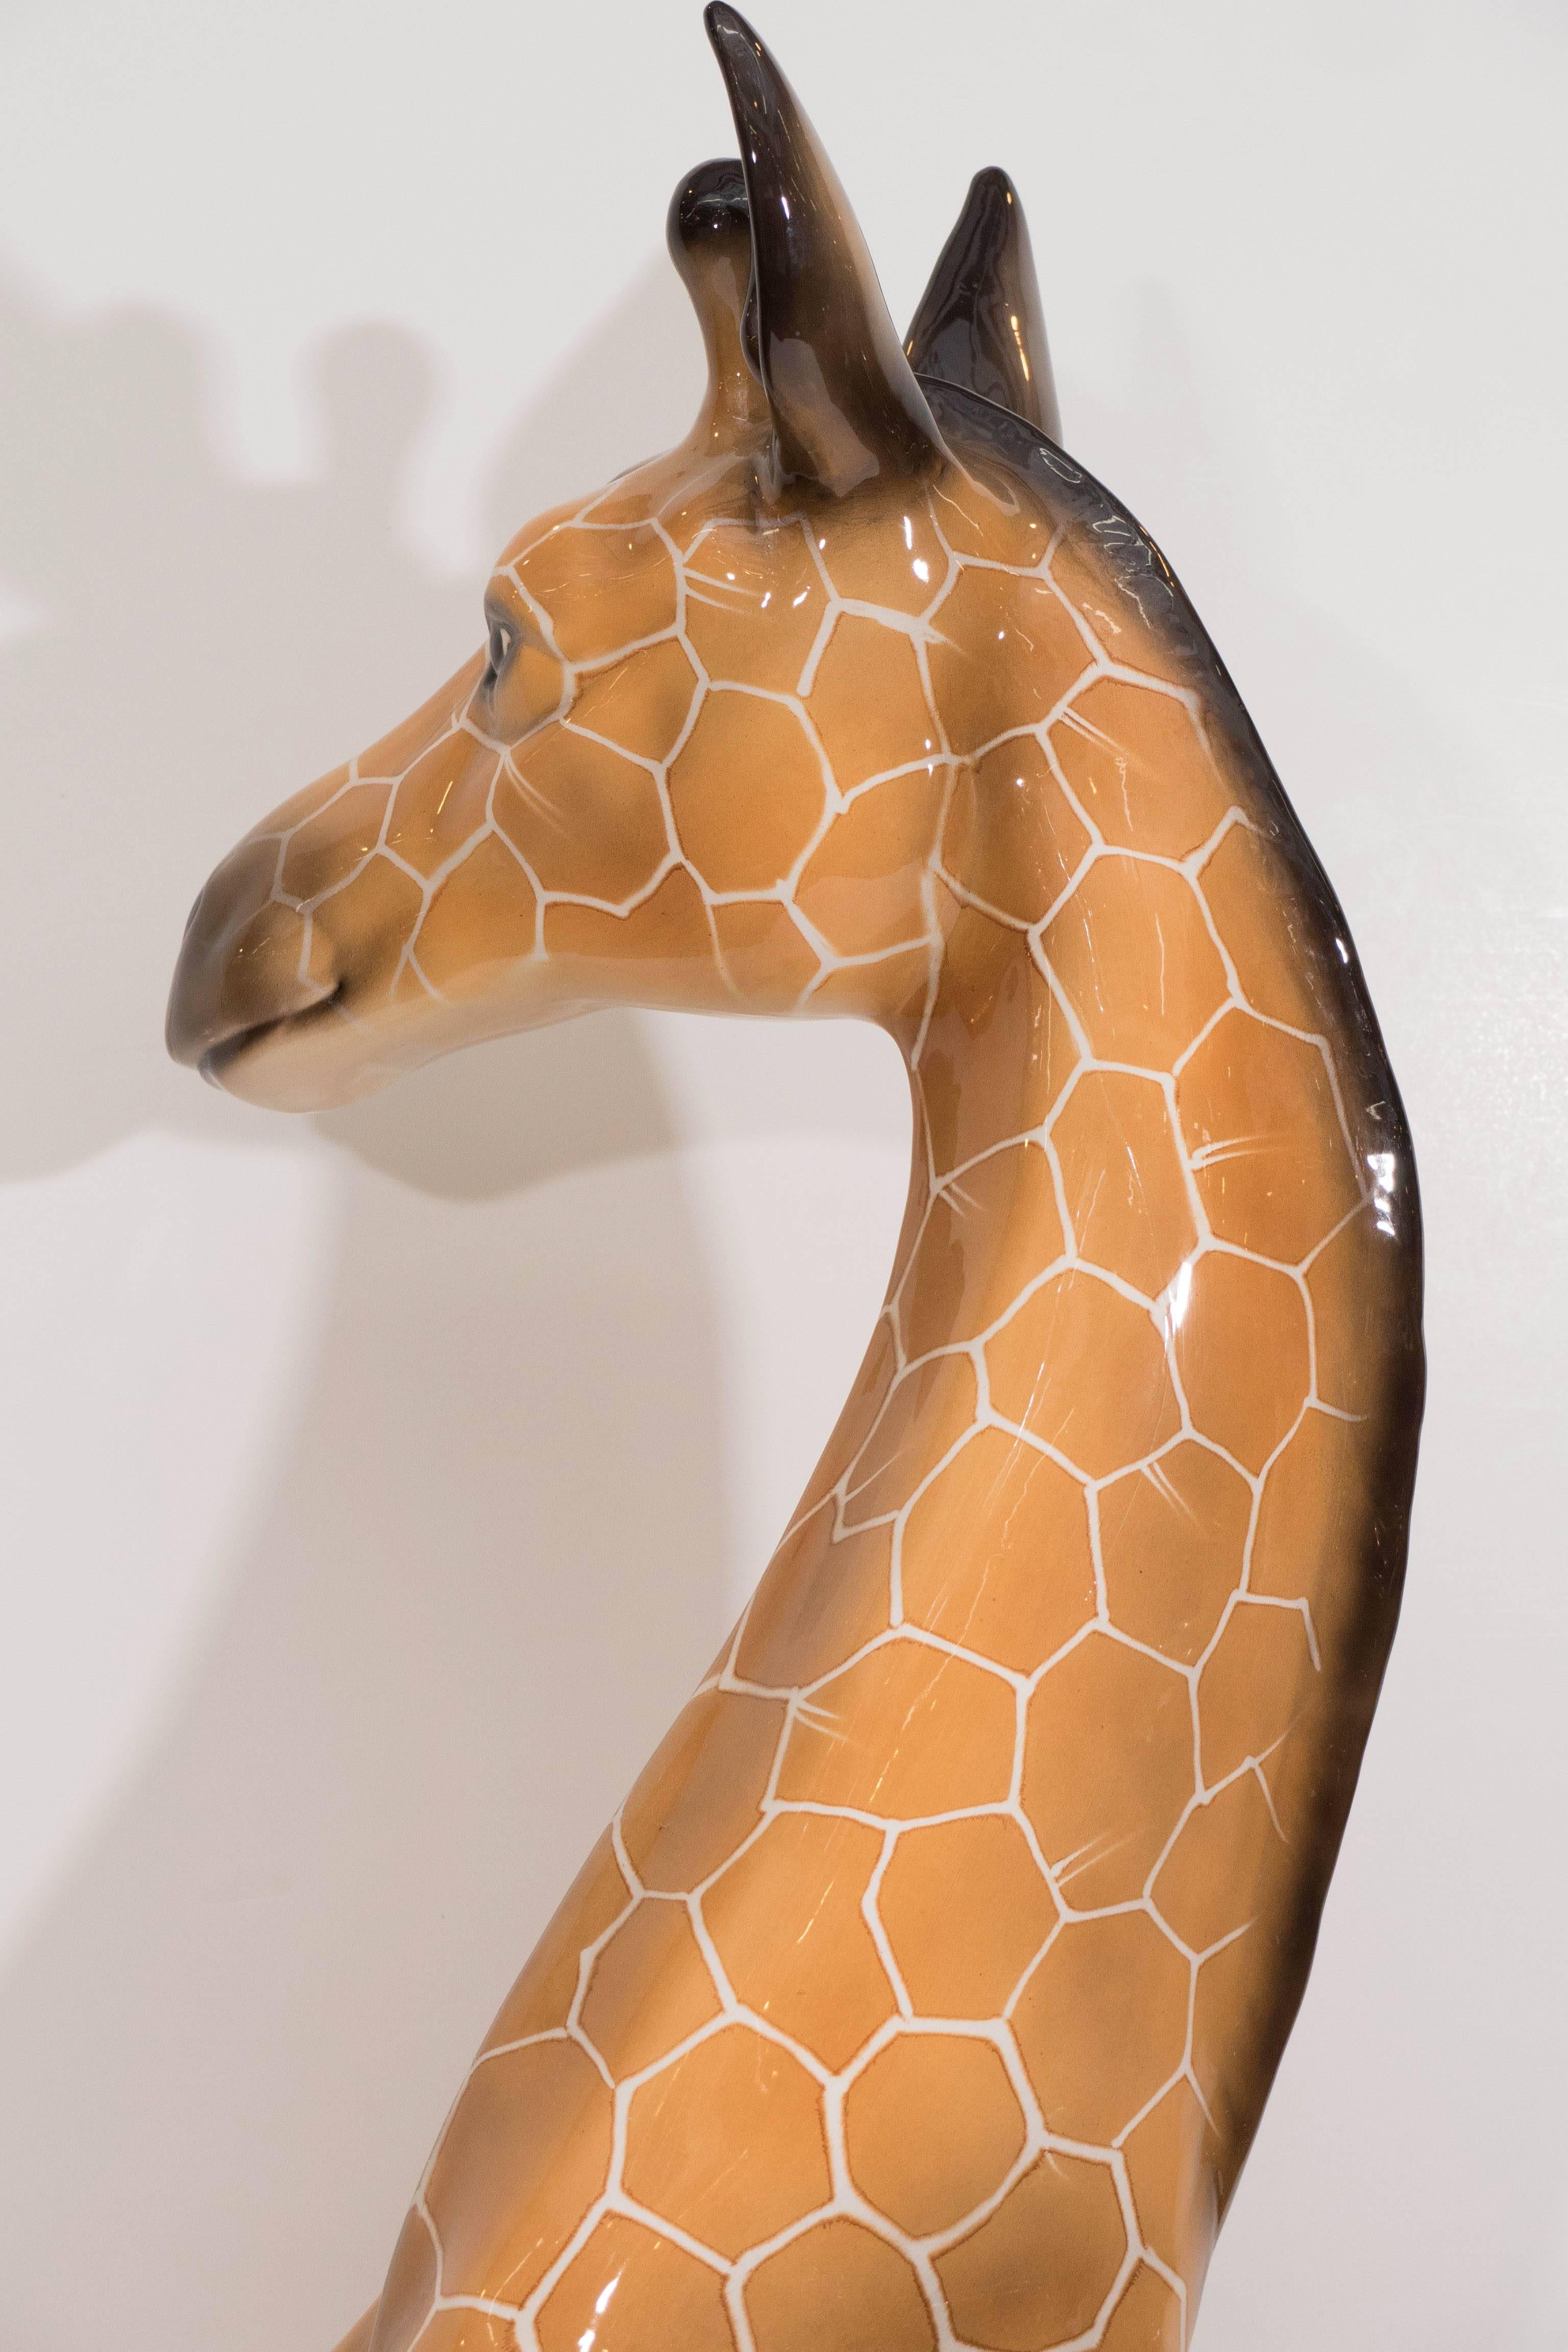 Glazed Midcentury Italian Ceramic Giraffe Sculpture